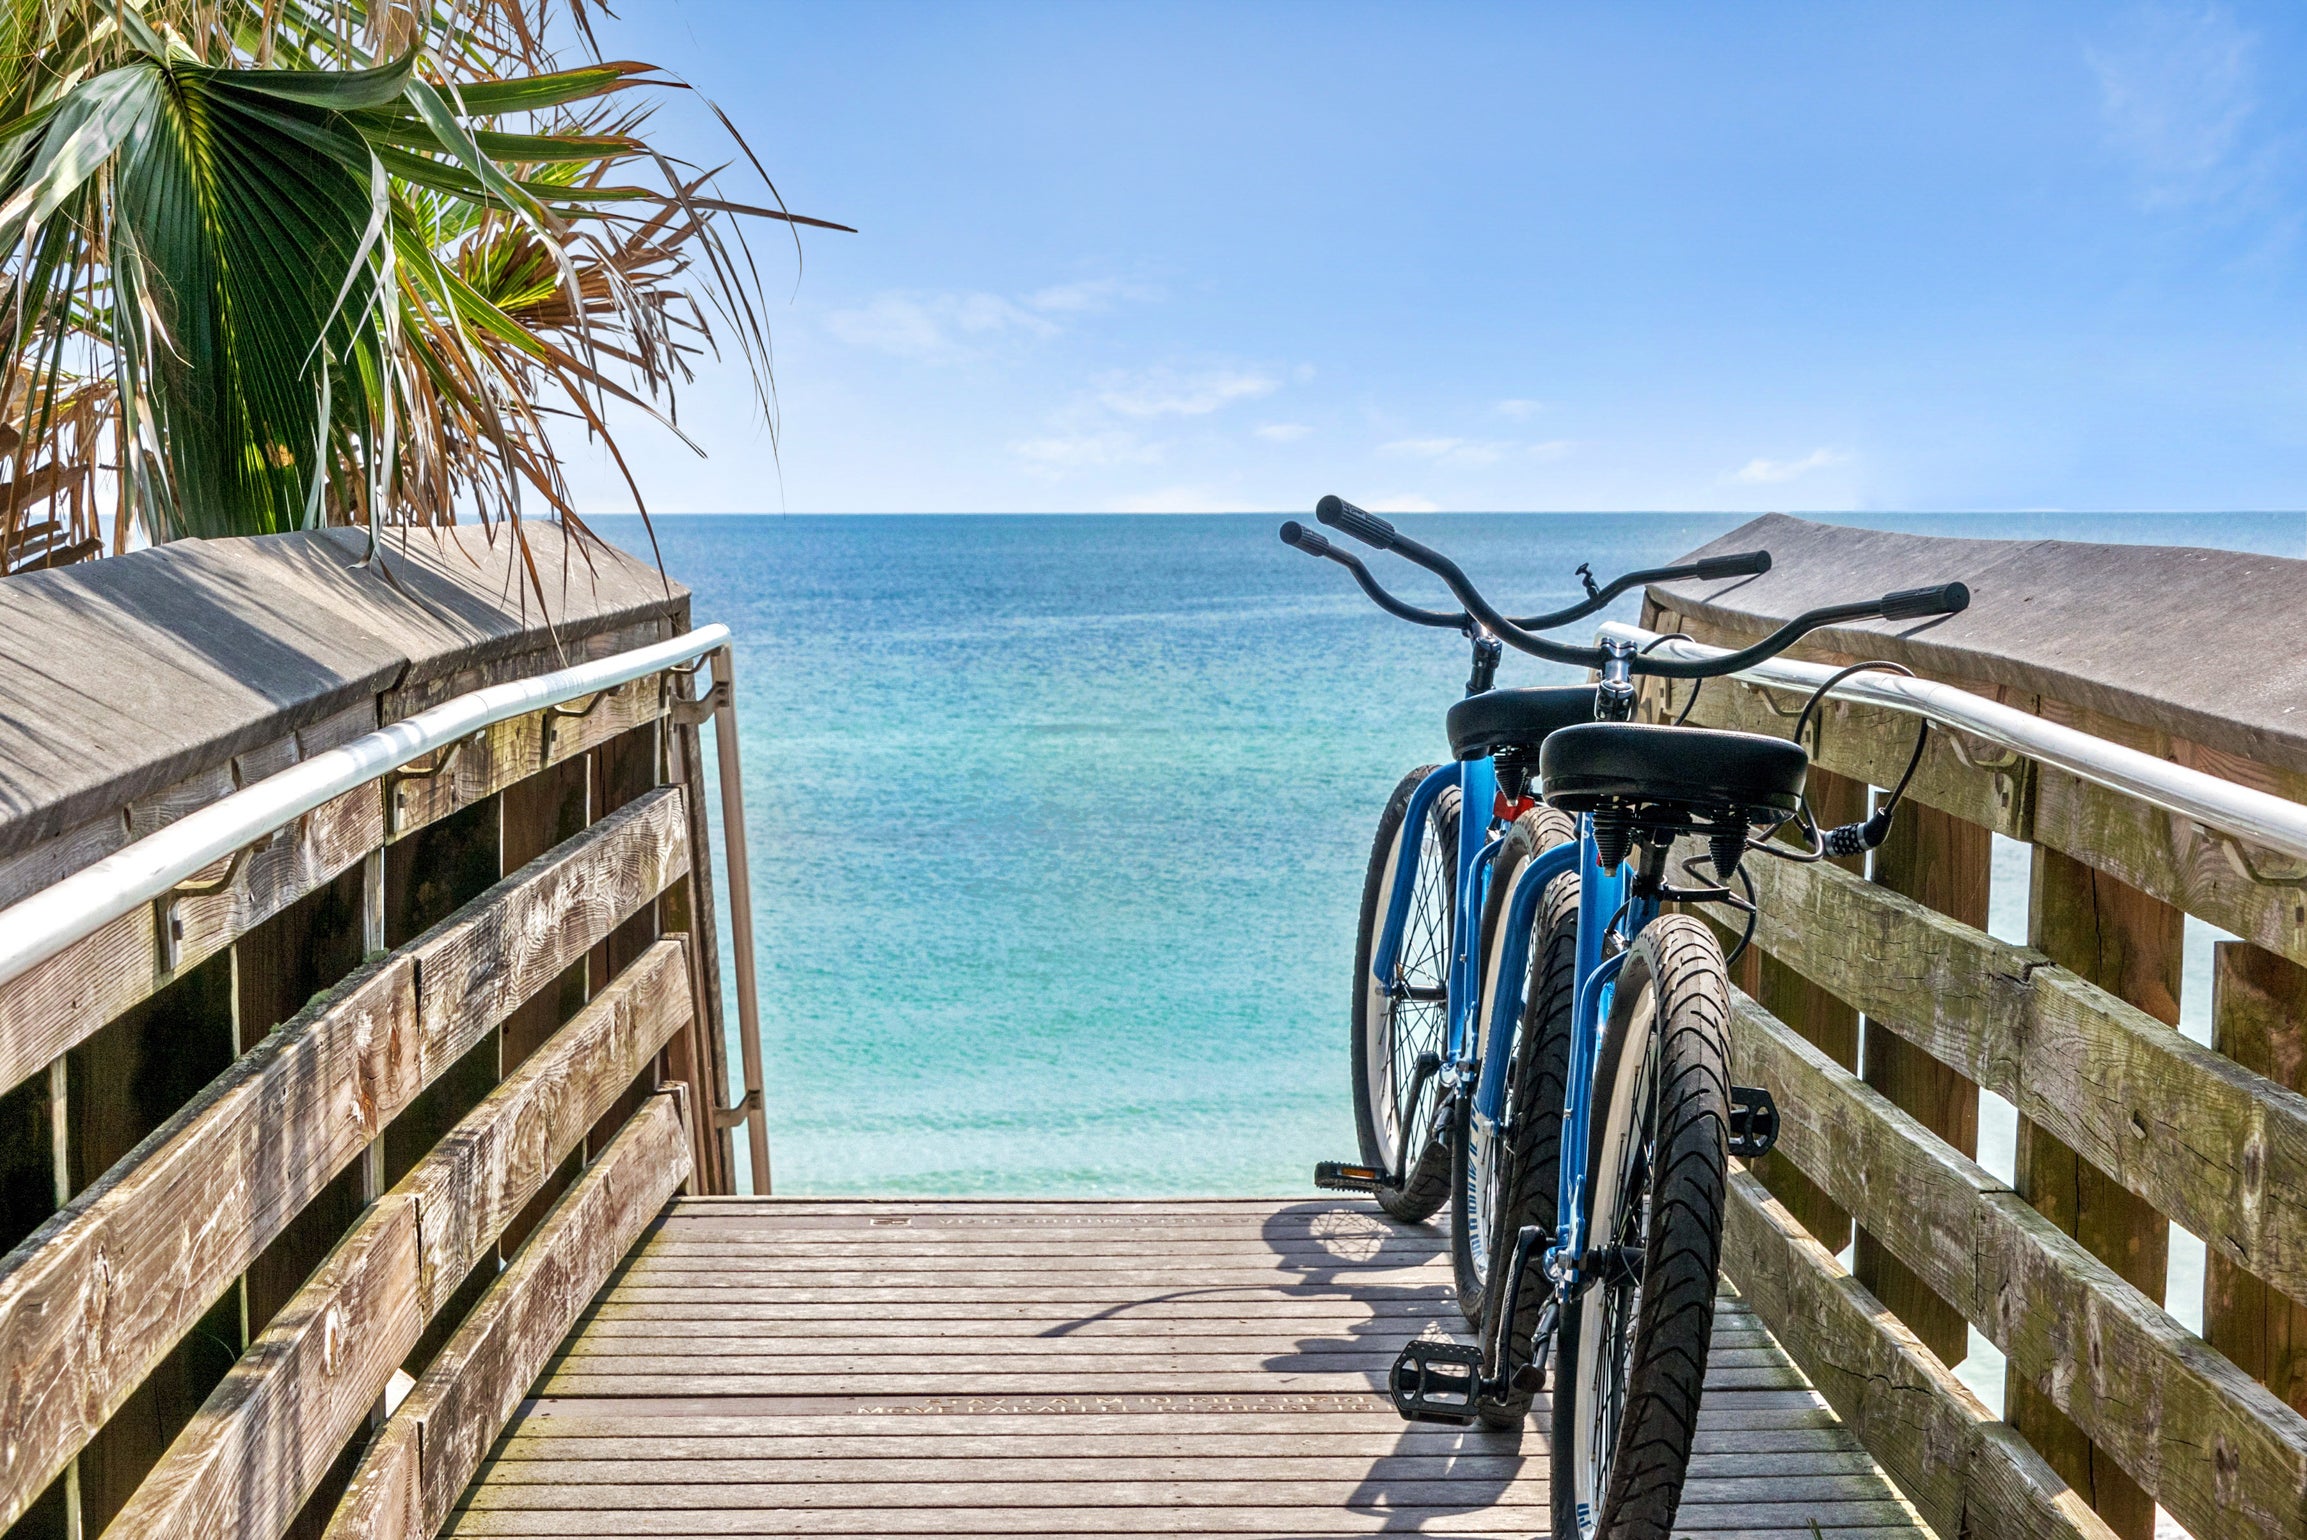 Bike to the beach